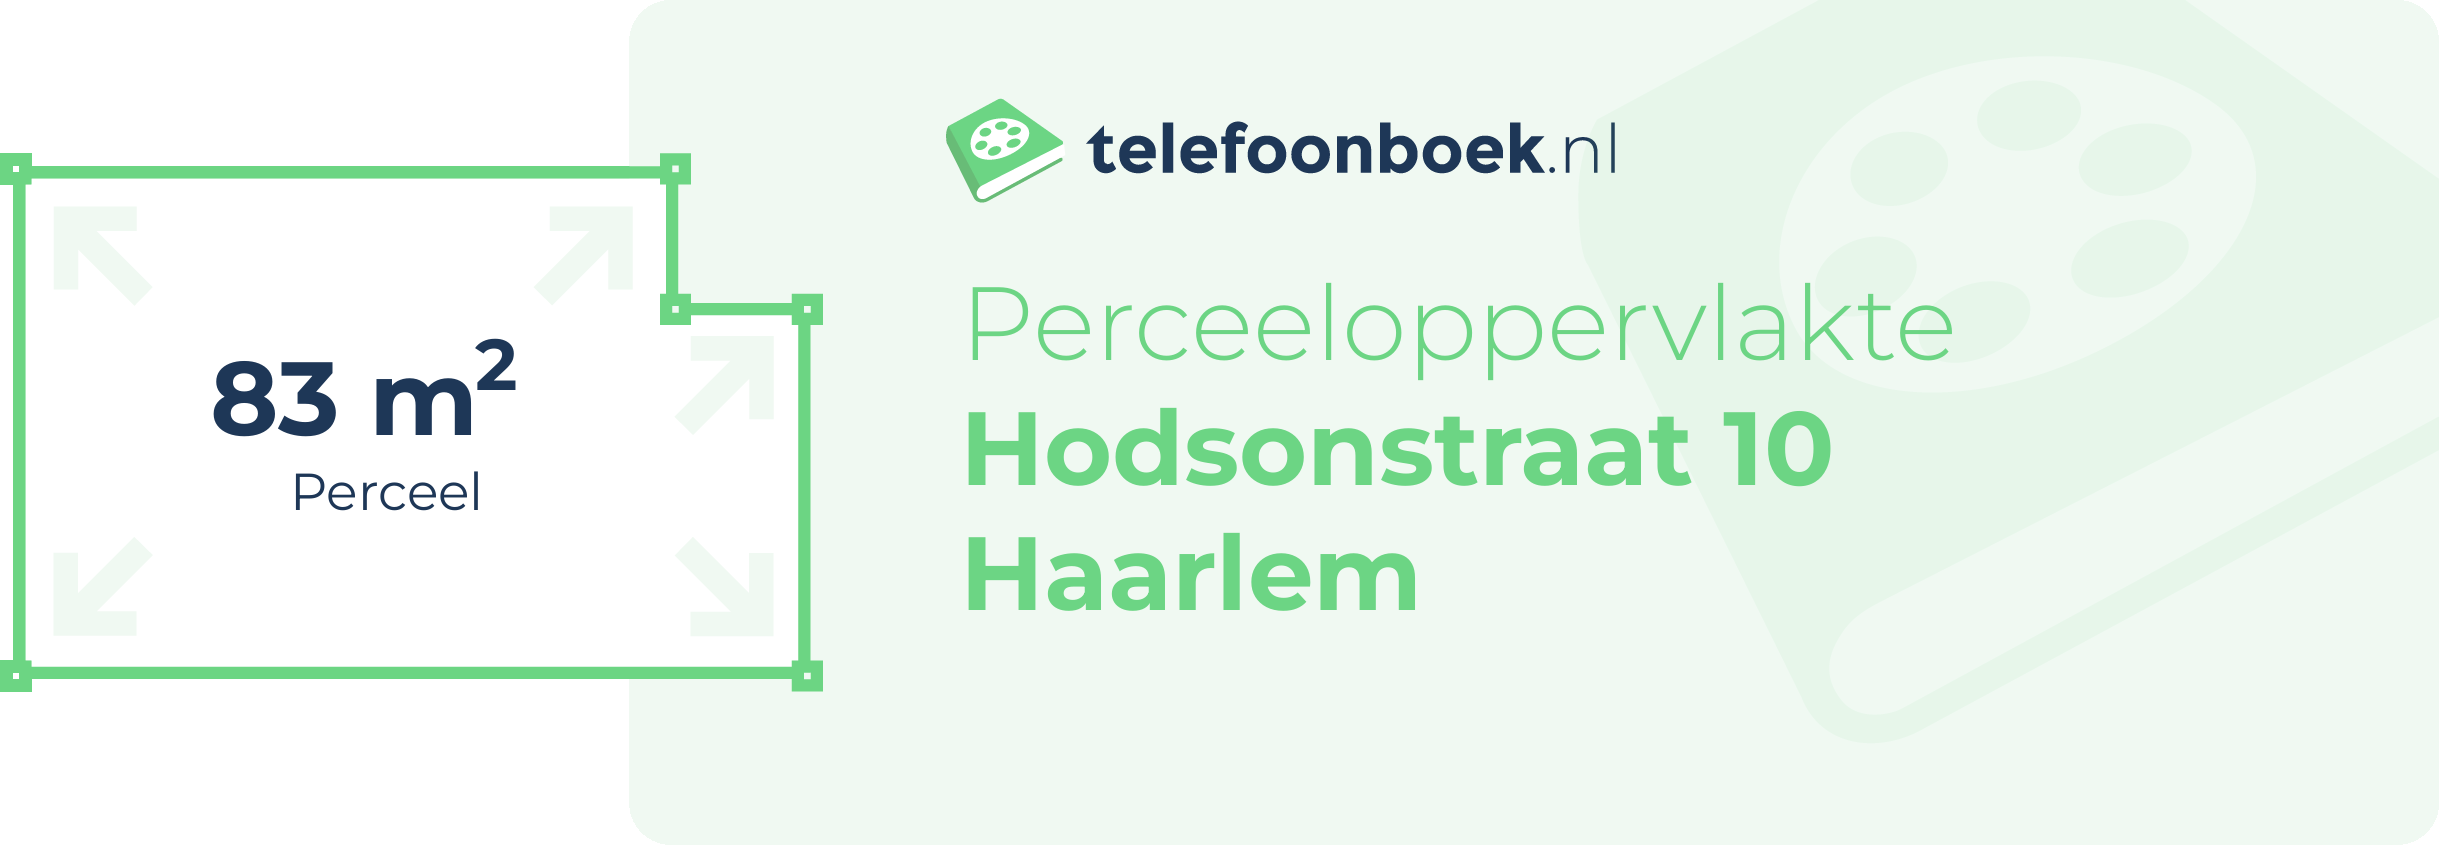 Perceeloppervlakte Hodsonstraat 10 Haarlem